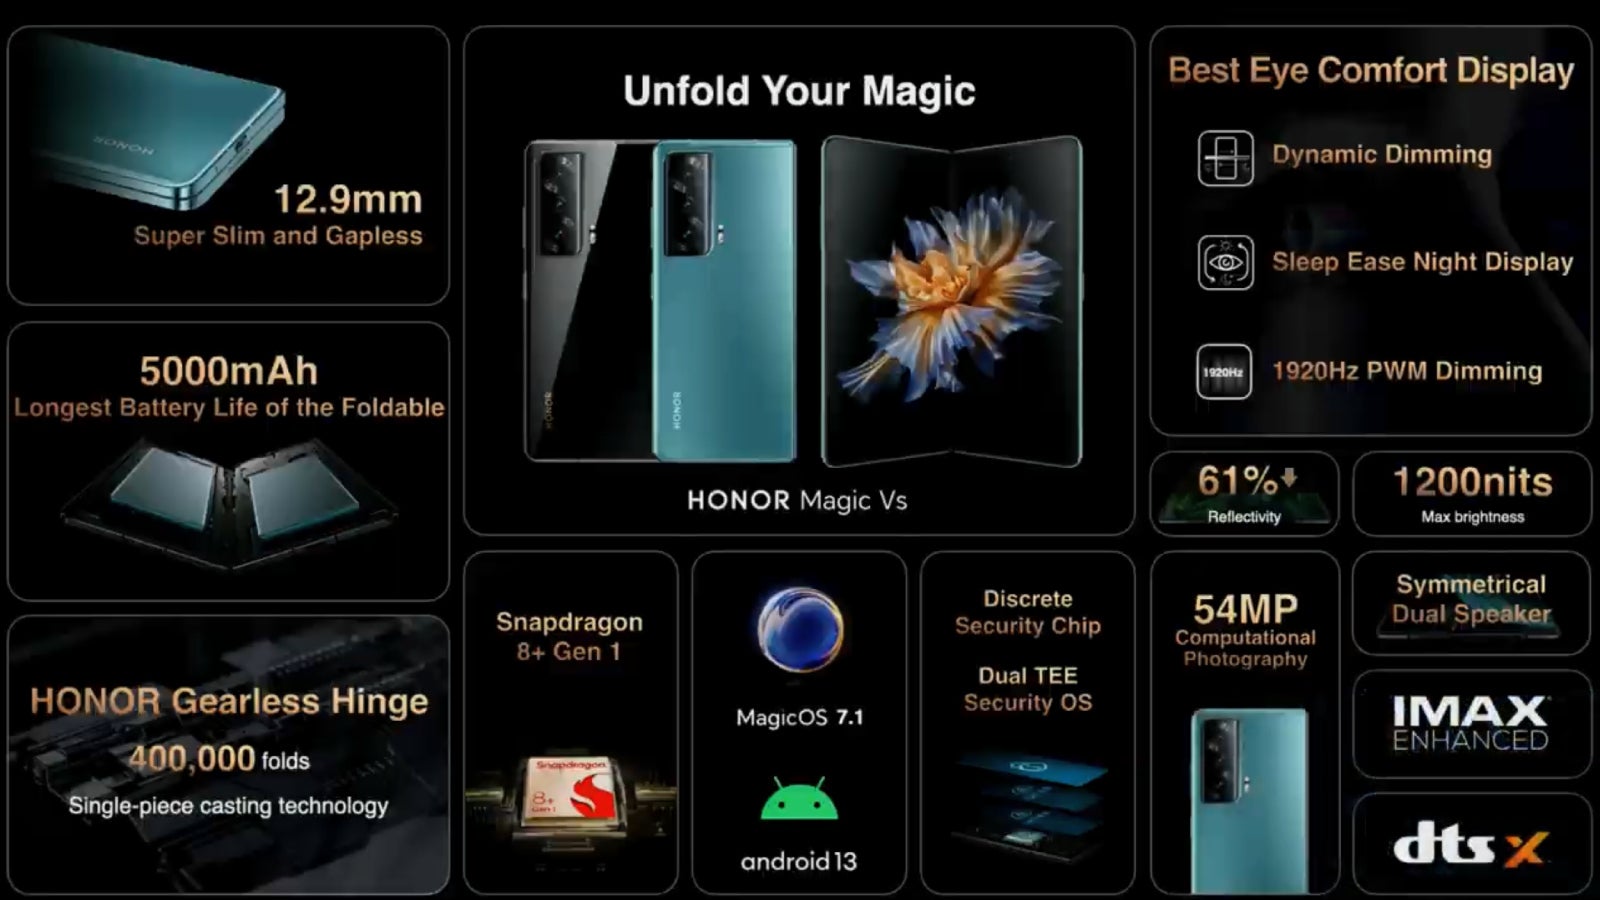 Honor Magic Vs specs at a glance - Honor Magic Vs might be the Galaxy Z Fold 4 killer in Europe